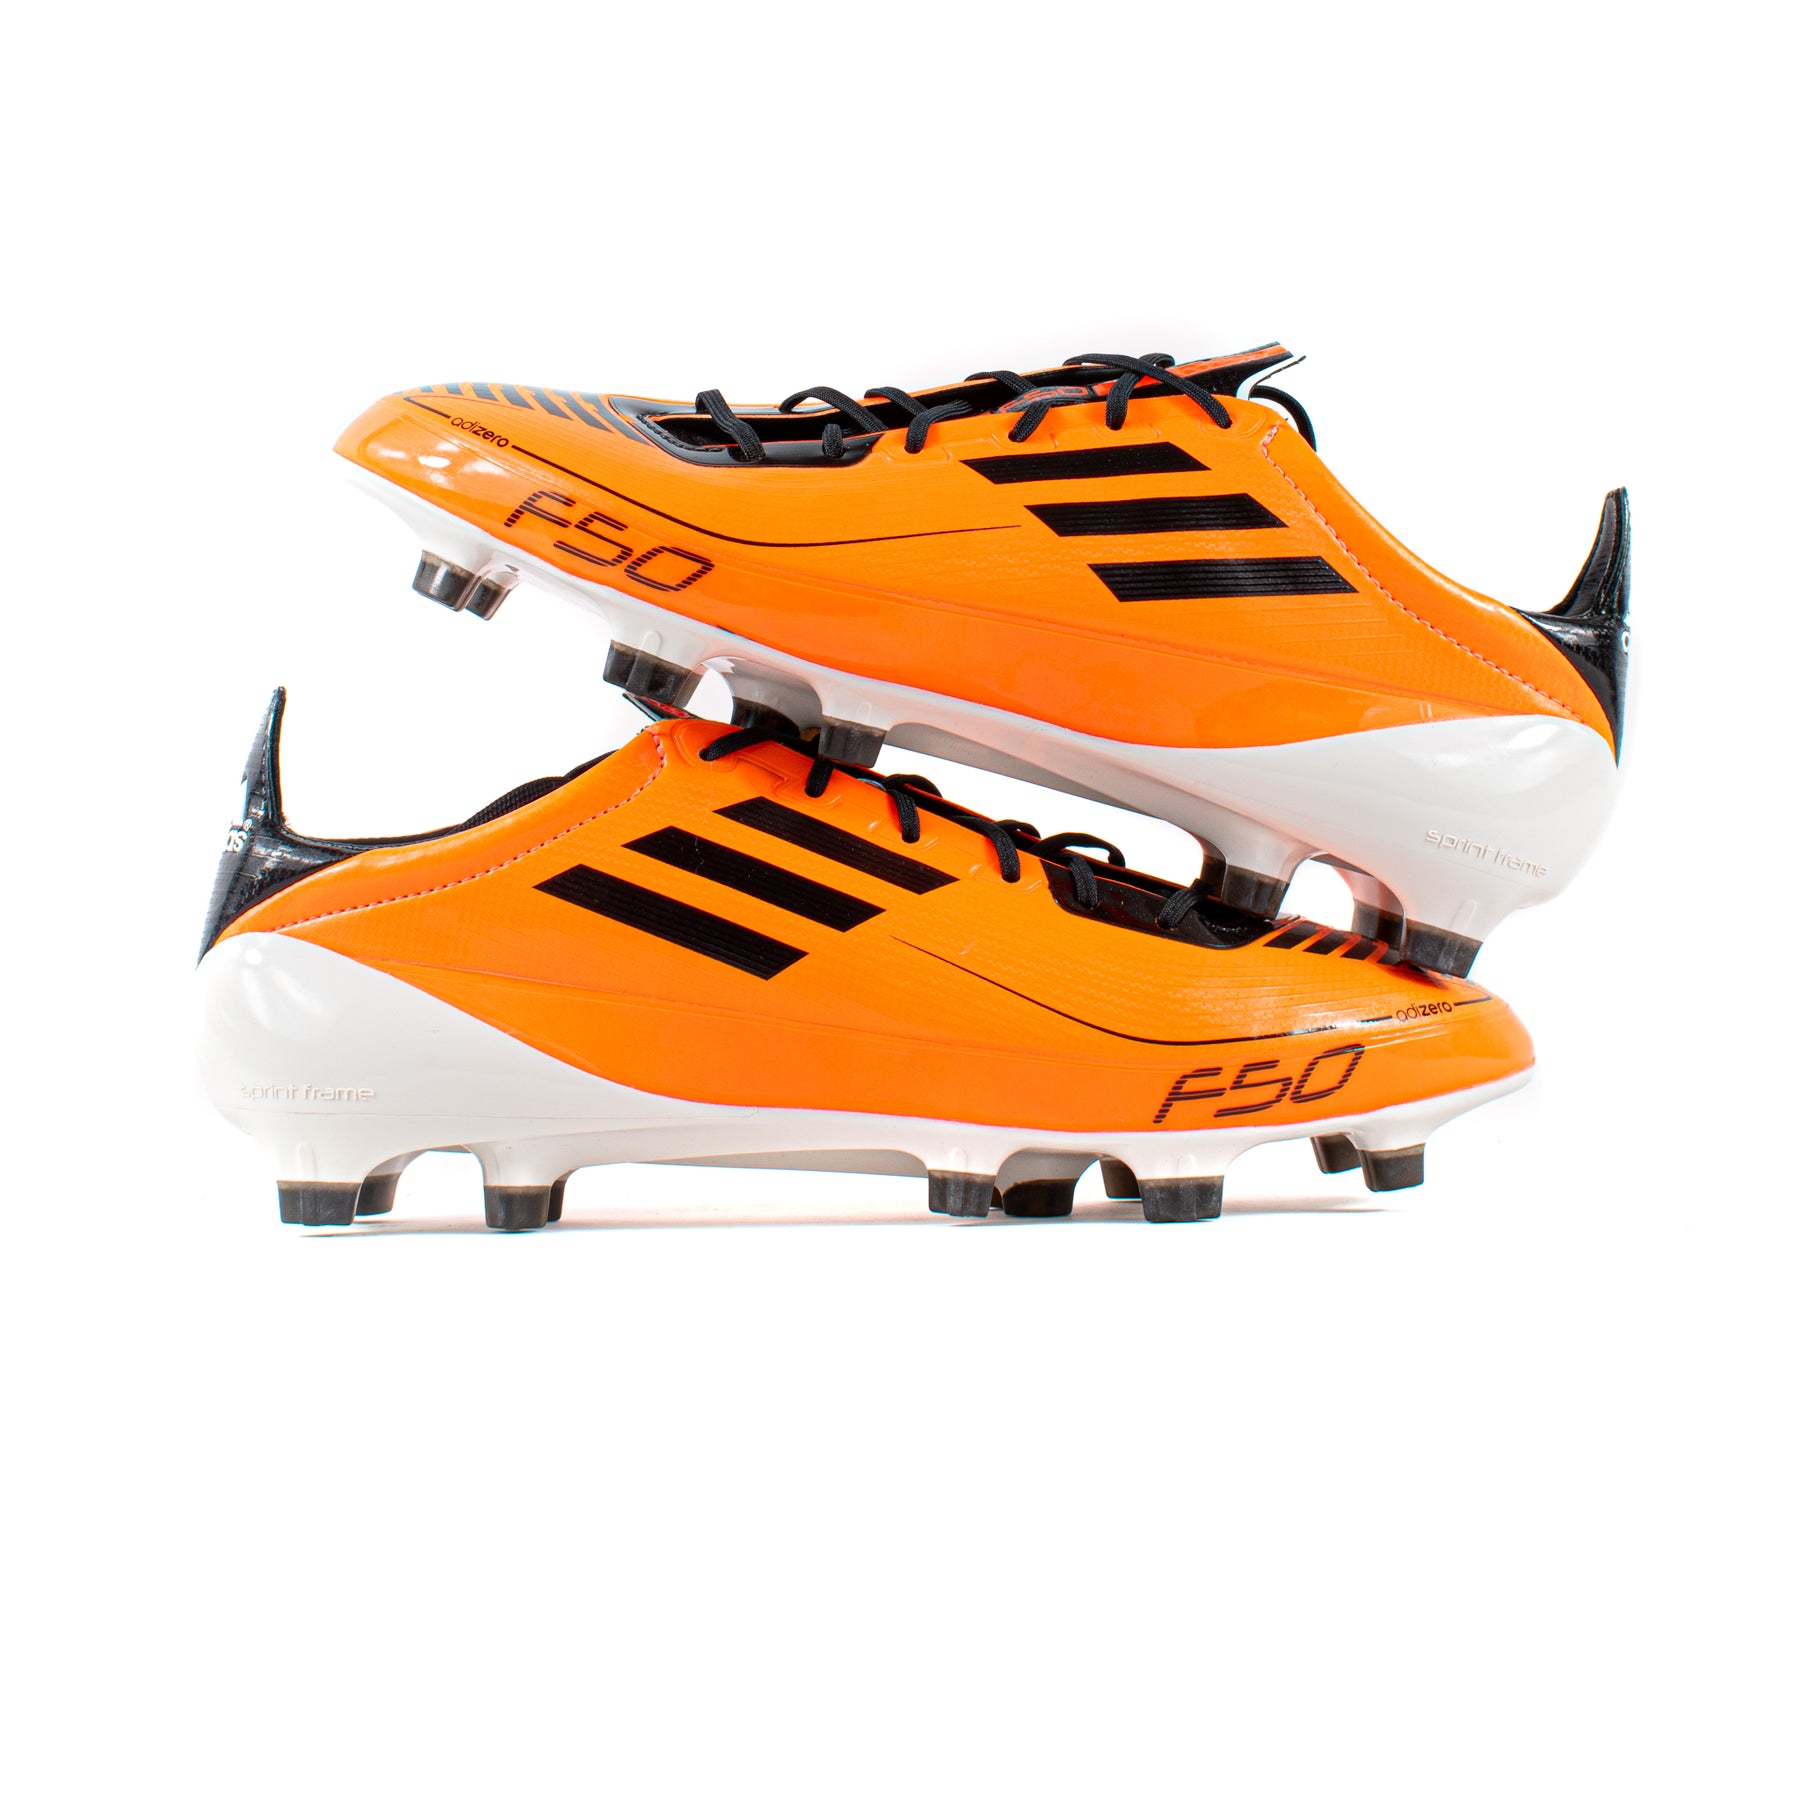 boble notifikation Loaded Adidas F50 Adizero Orange FG – Classic Soccer Cleats